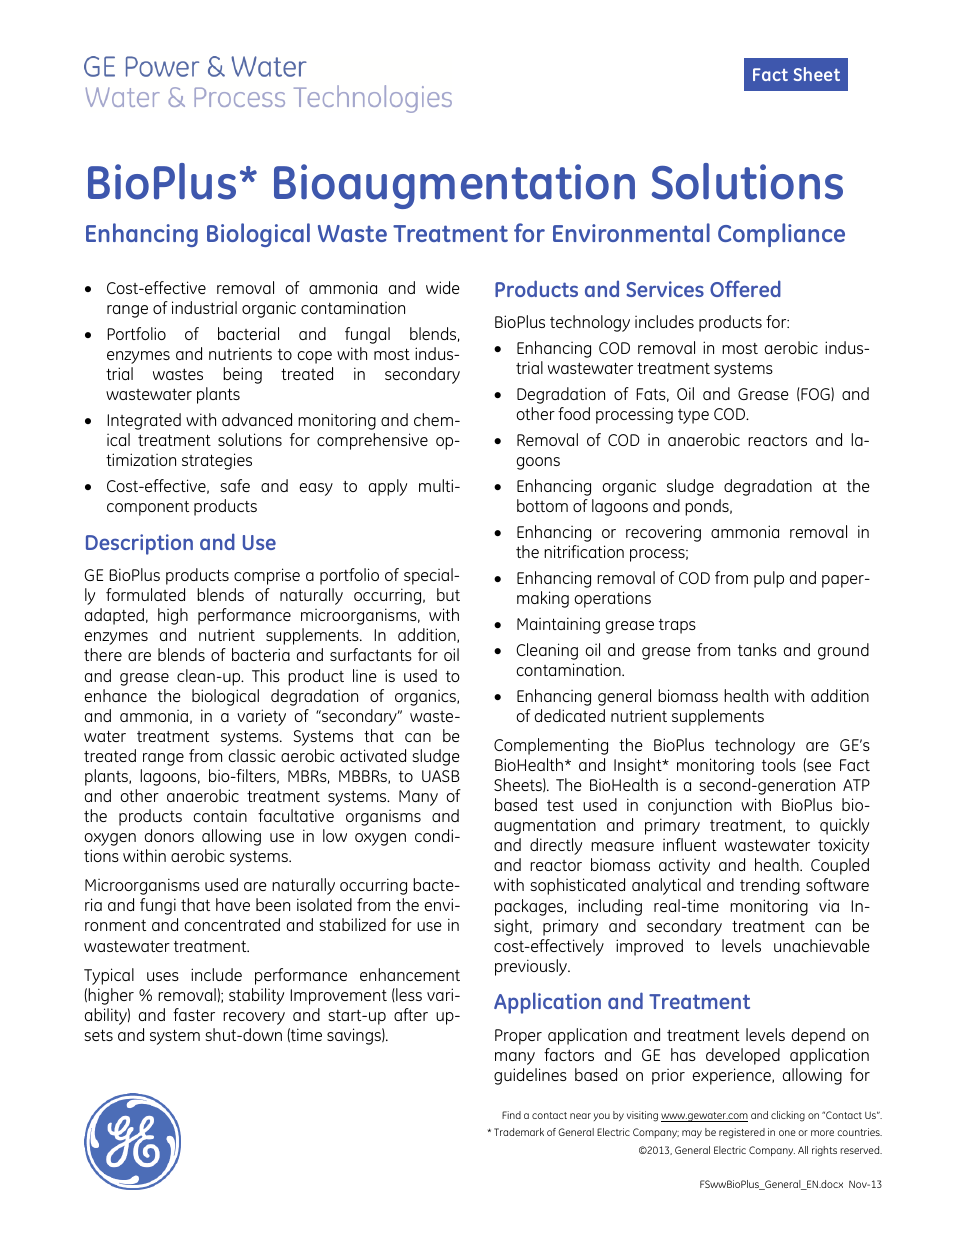 BioPlus